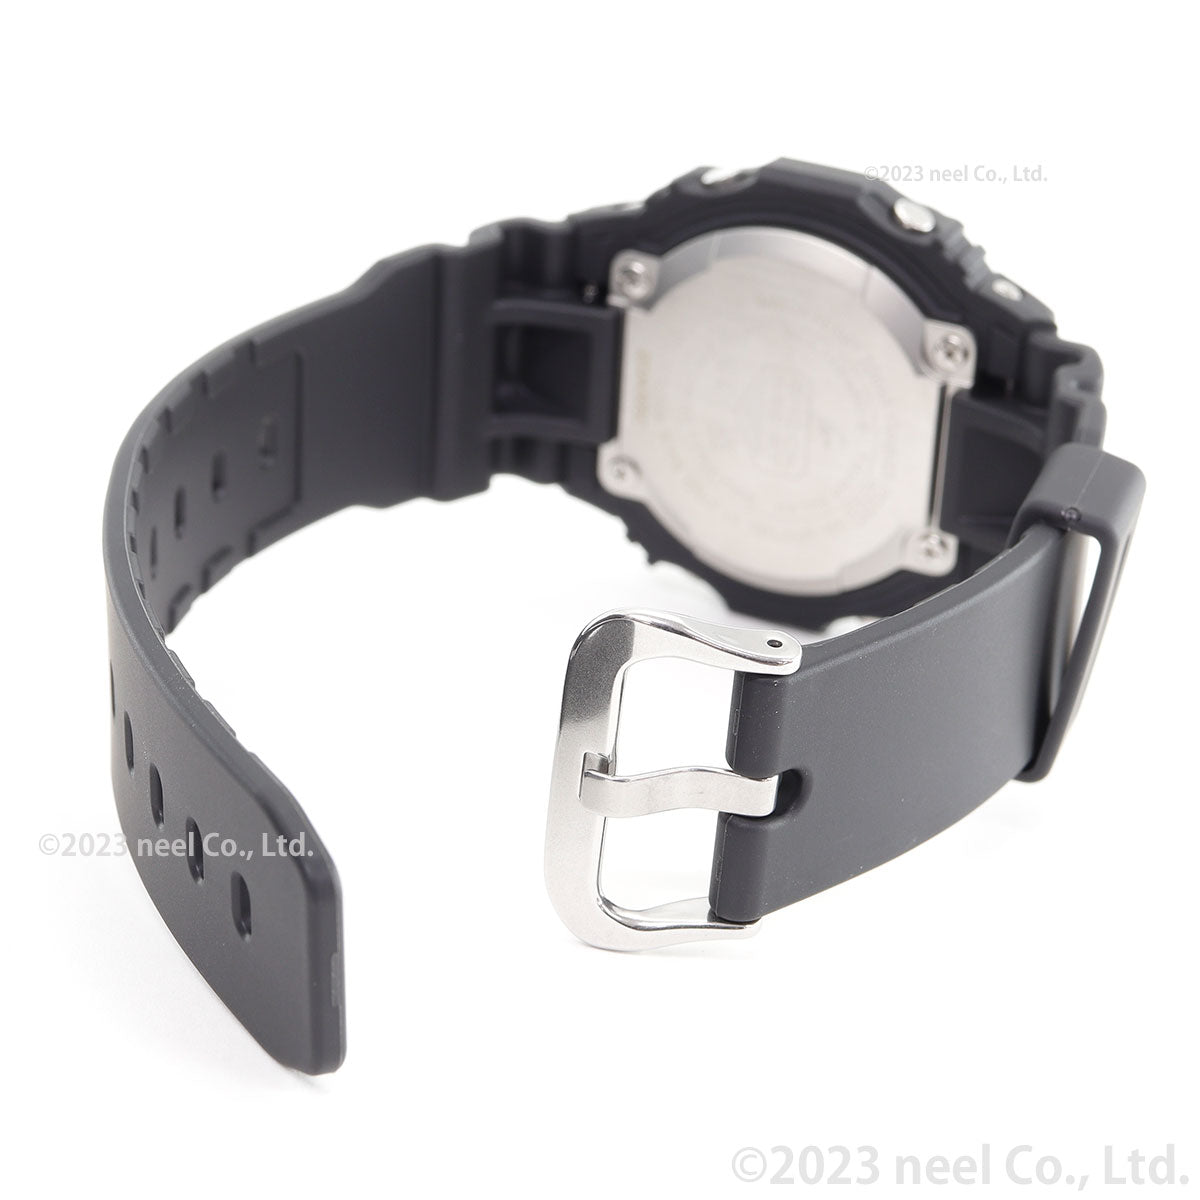 G-SHOCK Gショック GW-M5610U-1CJF 電波 ソーラー 電波時計 5600 ブラック デジタル メンズ 腕時計 カシオ CASIO タフソーラー